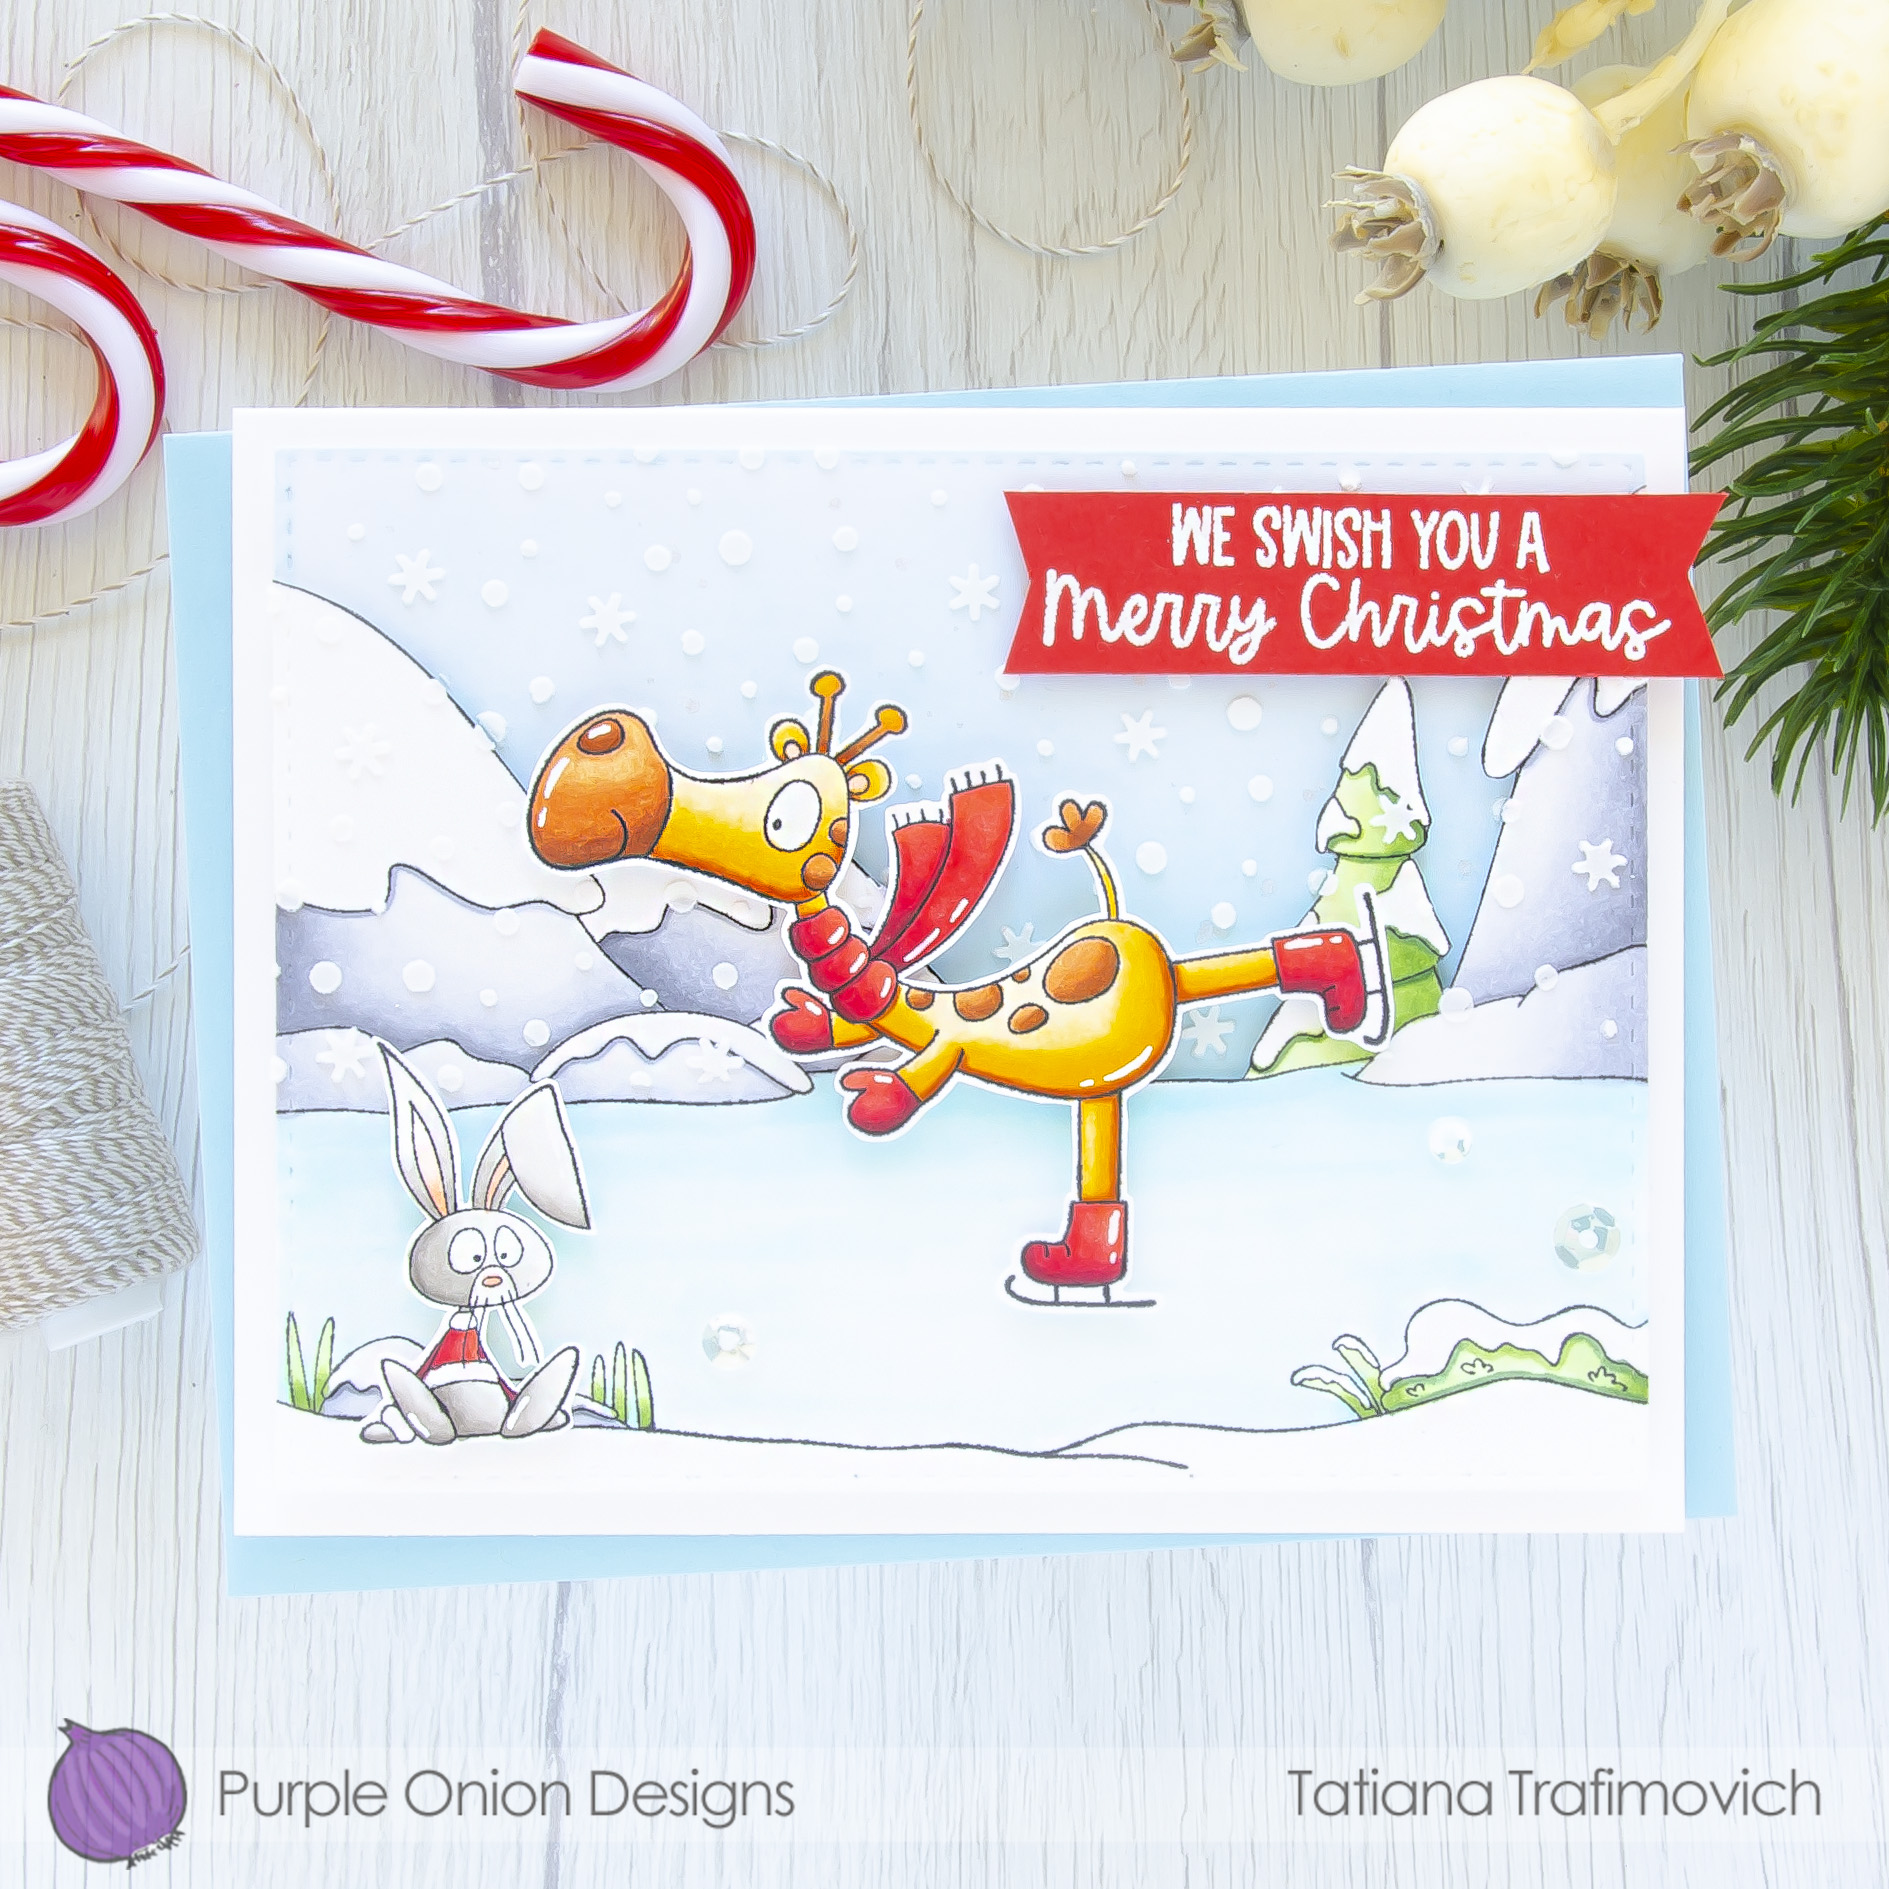 We Swish You A Merry Christmas #handmade card by Tatiana Trafimovich #tatianacraftandart - stamps by Purple Onion Designs